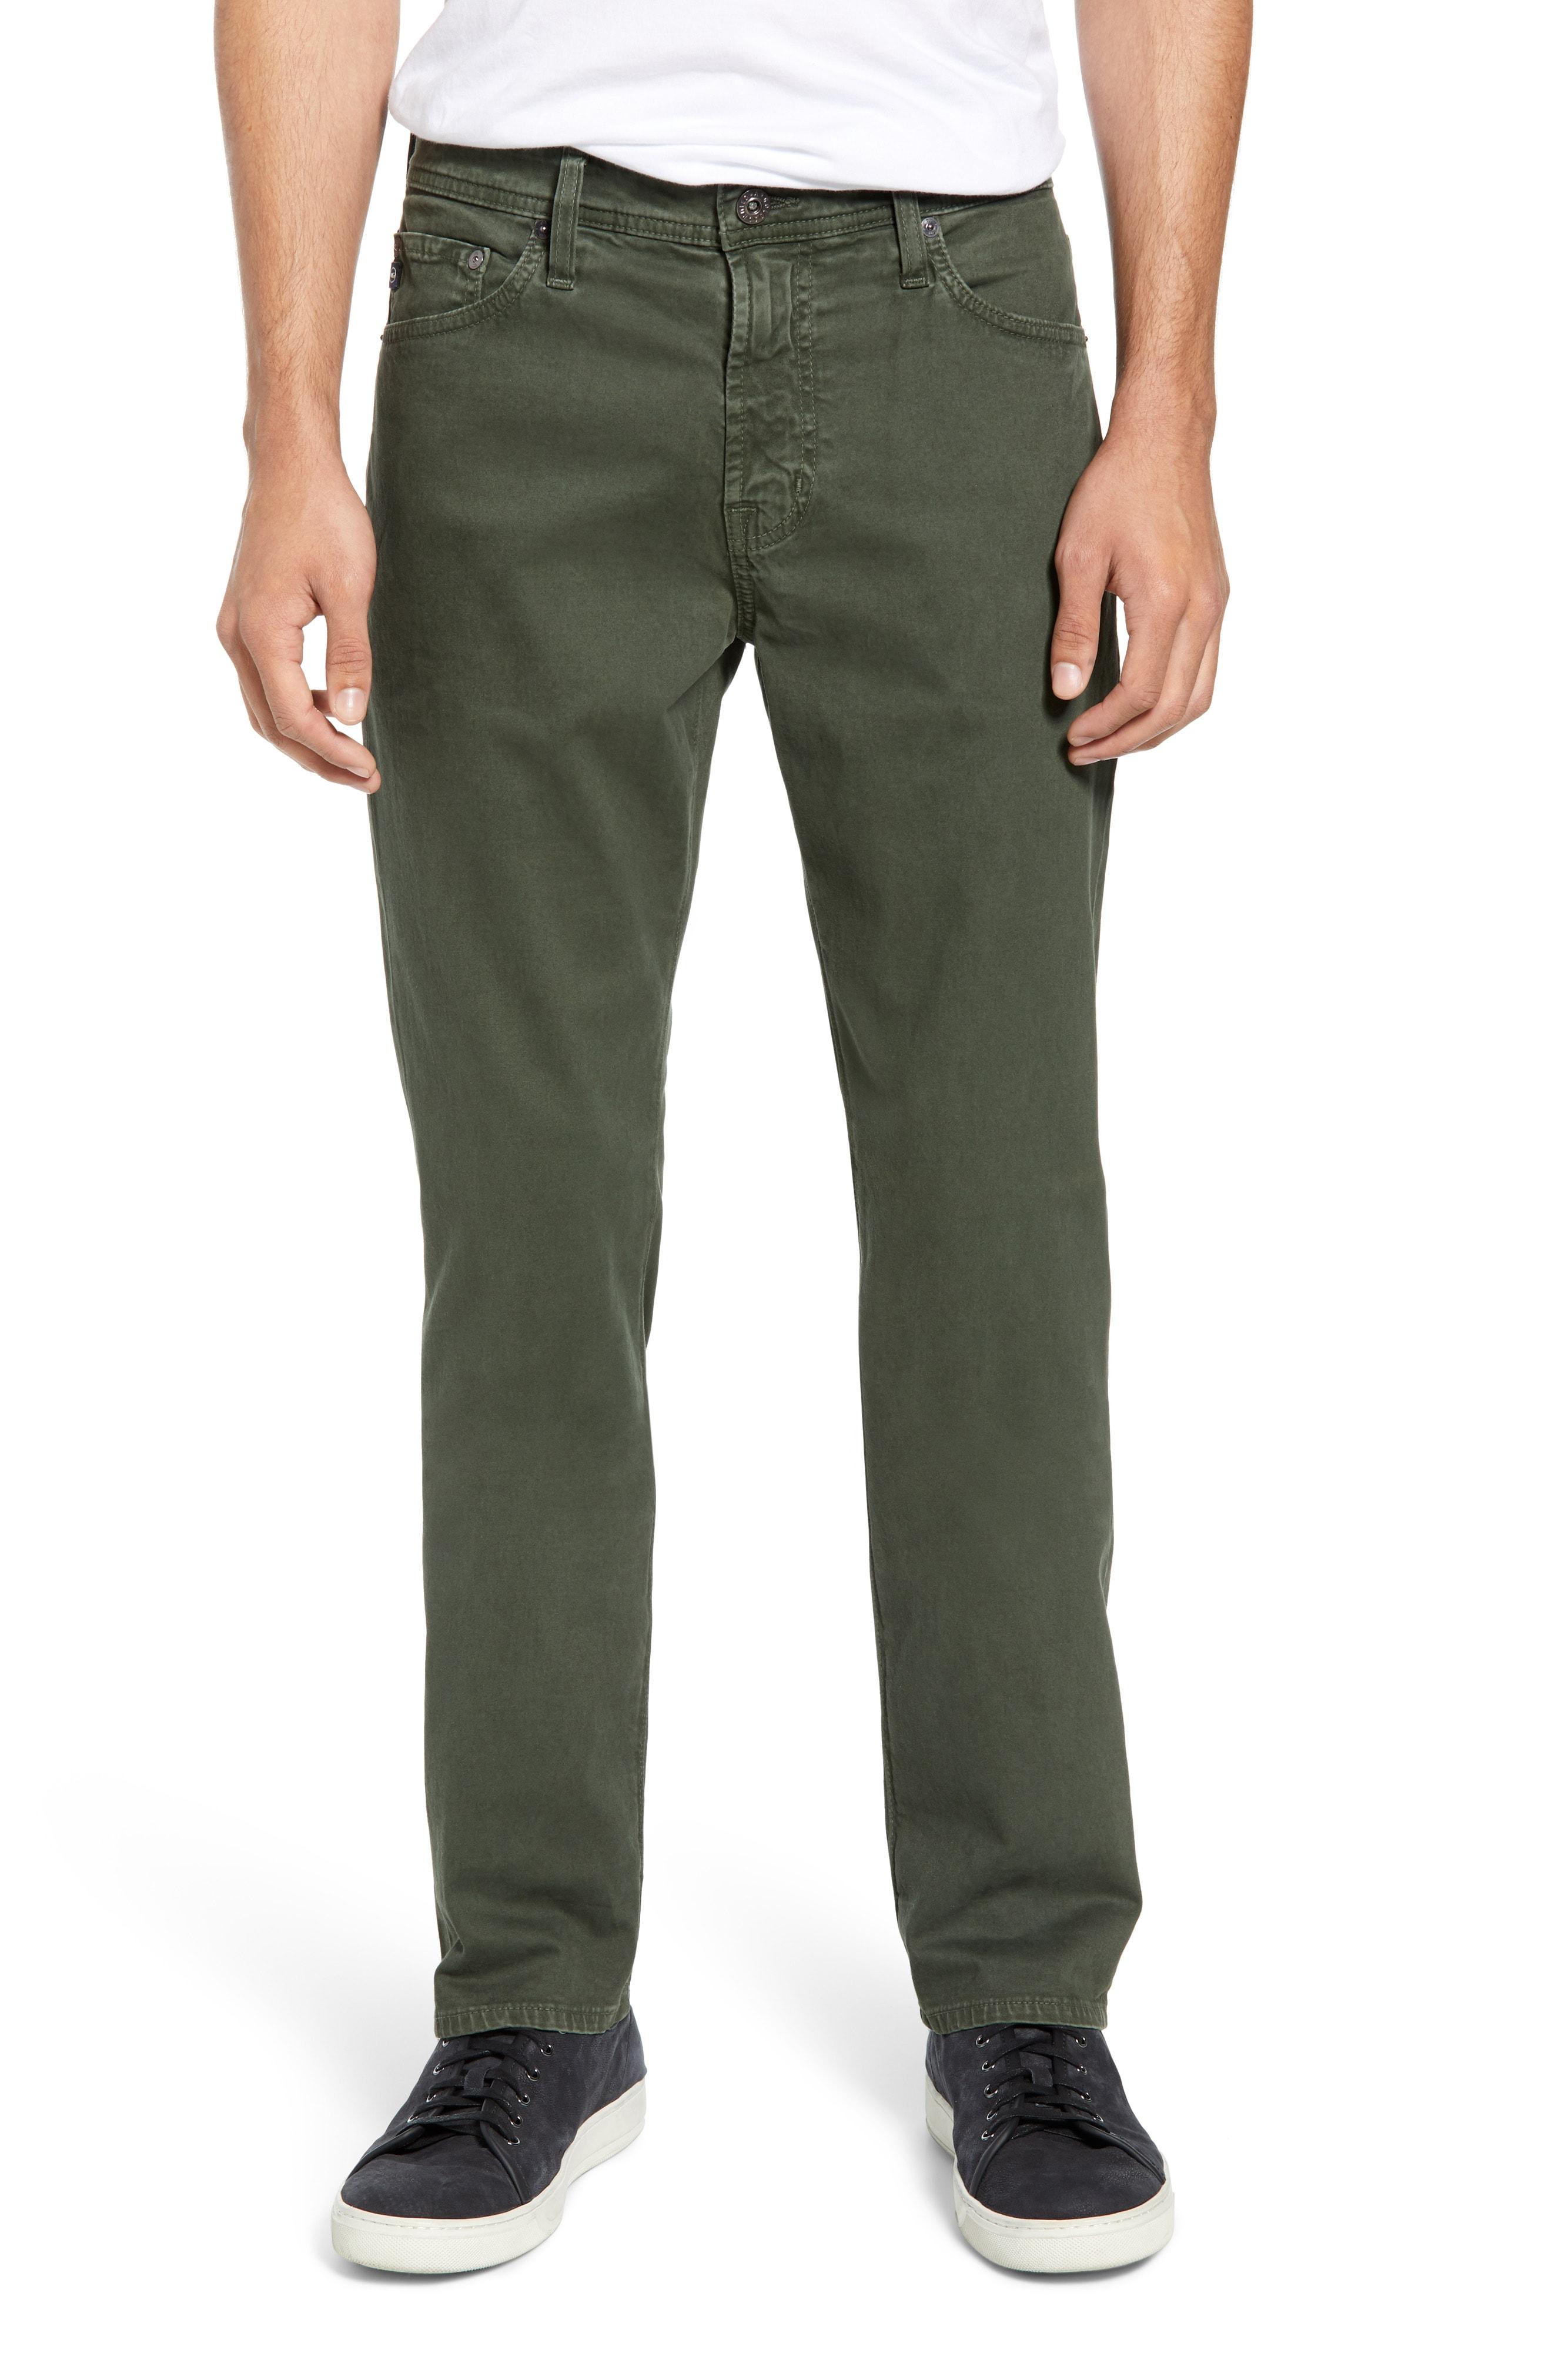 Lyst - AG Jeans Everett Sud Slim Straight Fit Pants in Green for Men